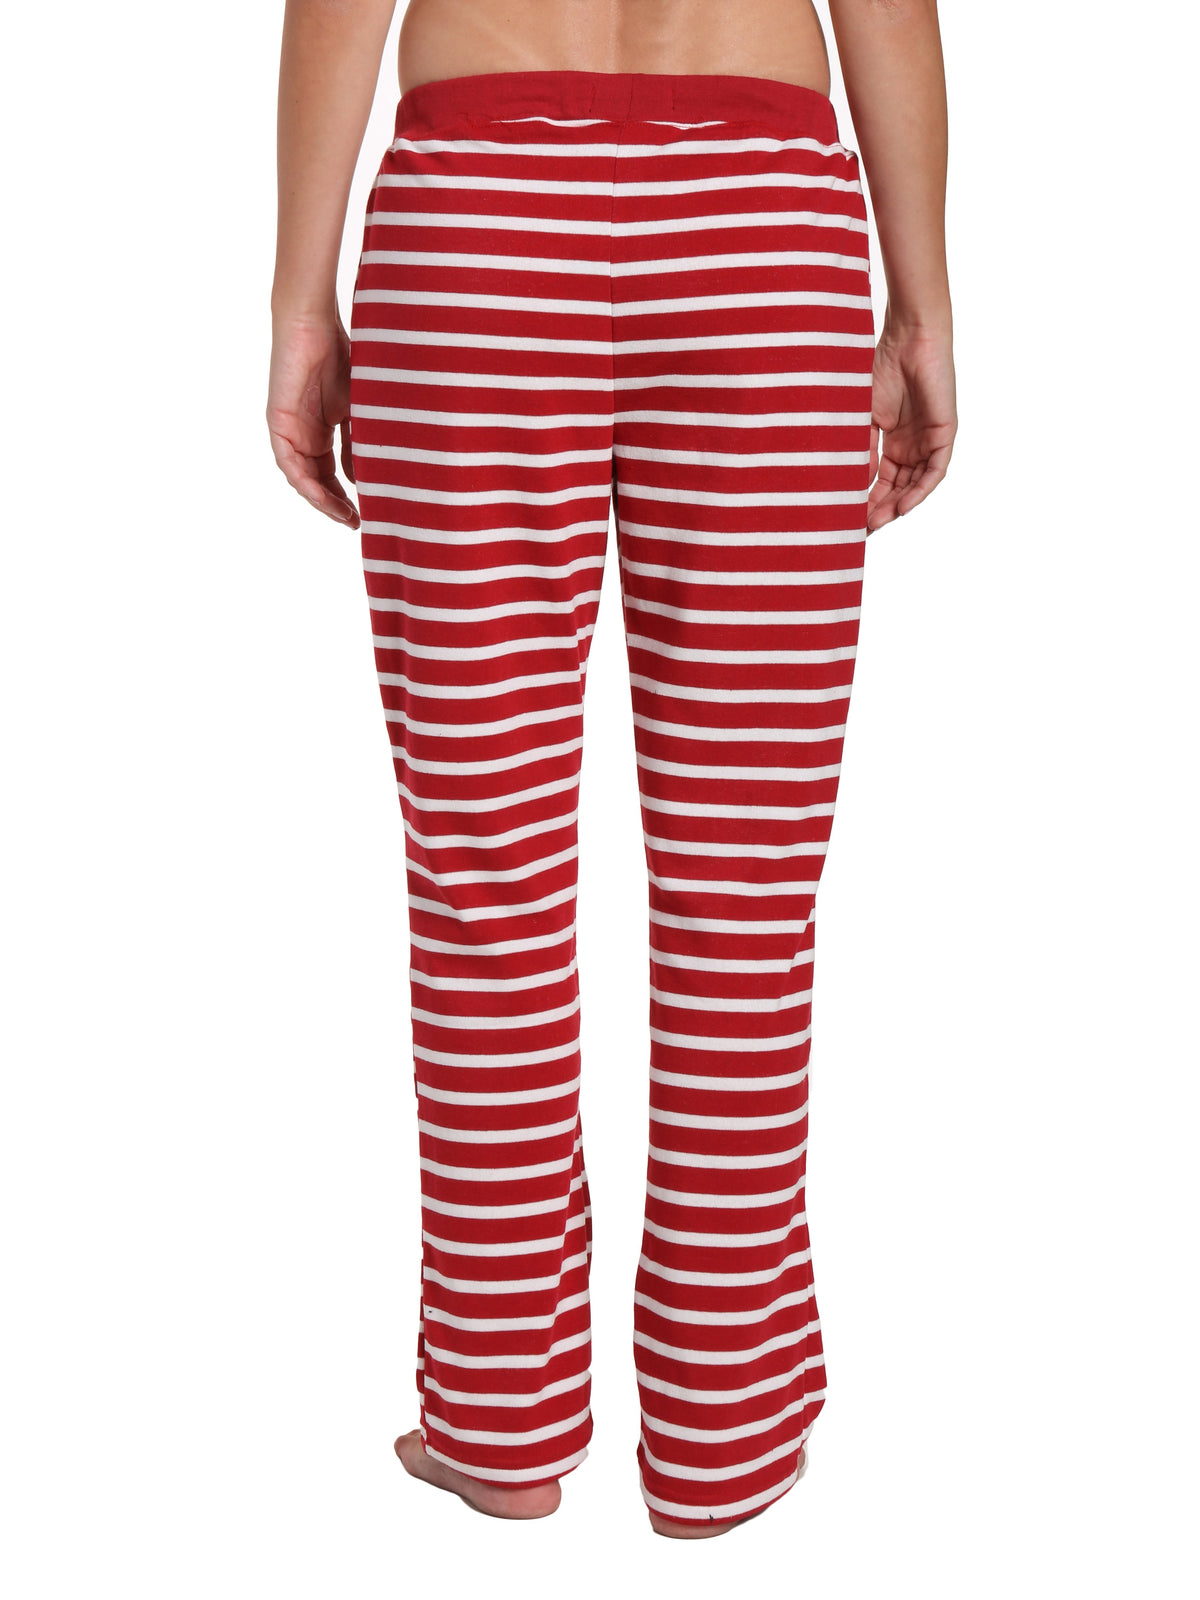 Stripes Red White